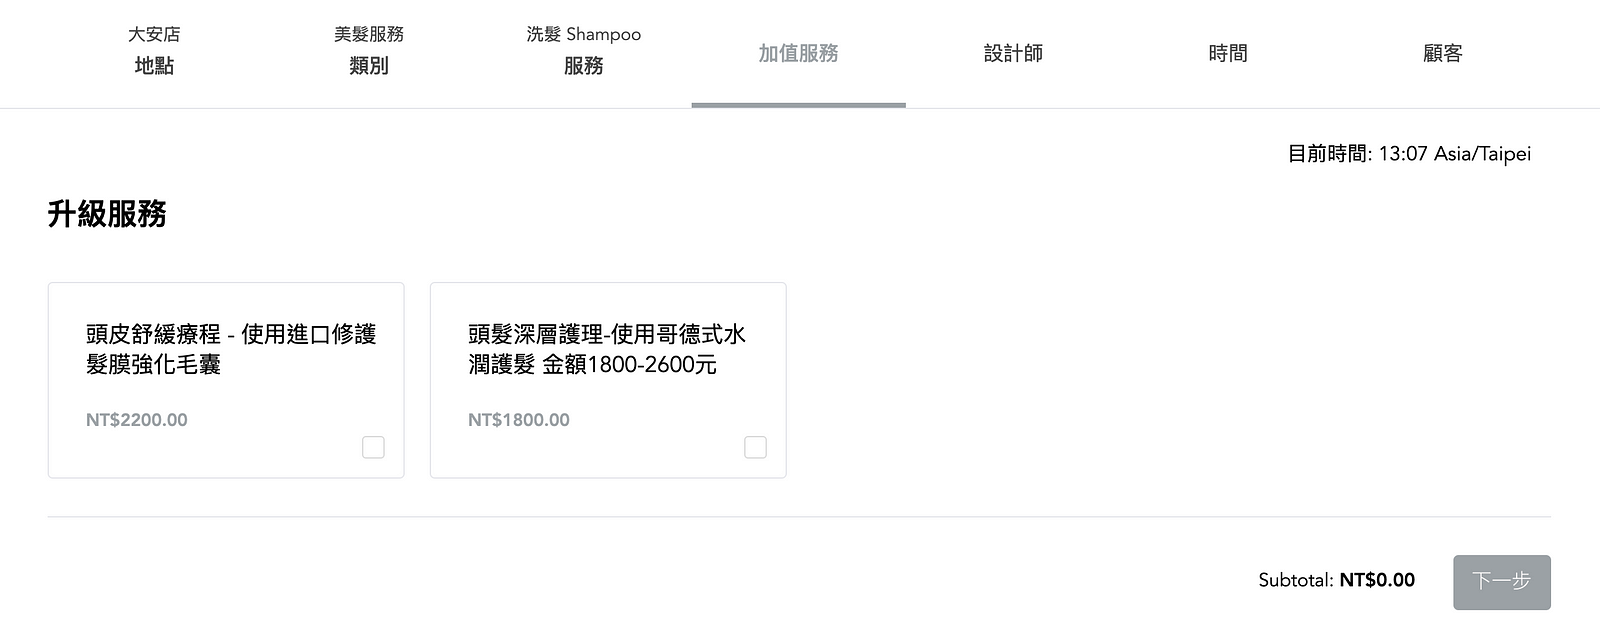 SimplyBook.me 商家案例分享：知名台北東區美髮沙龍 — 80’s STUDIO 線上預約系統！